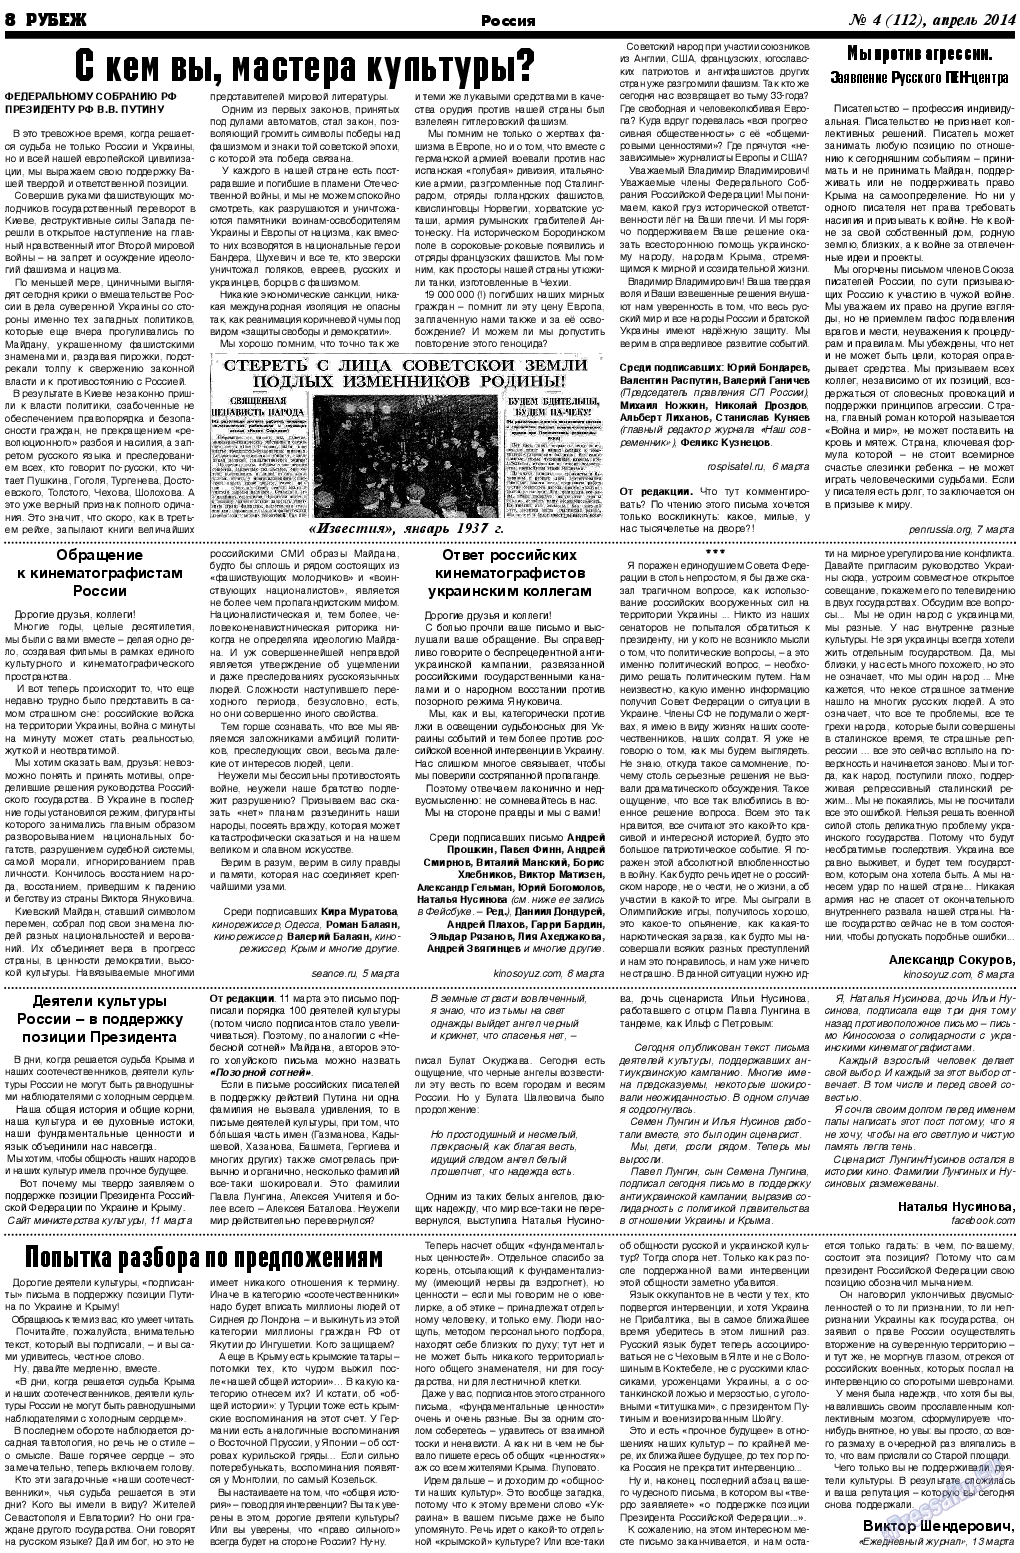 Рубеж, газета. 2014 №4 стр.8